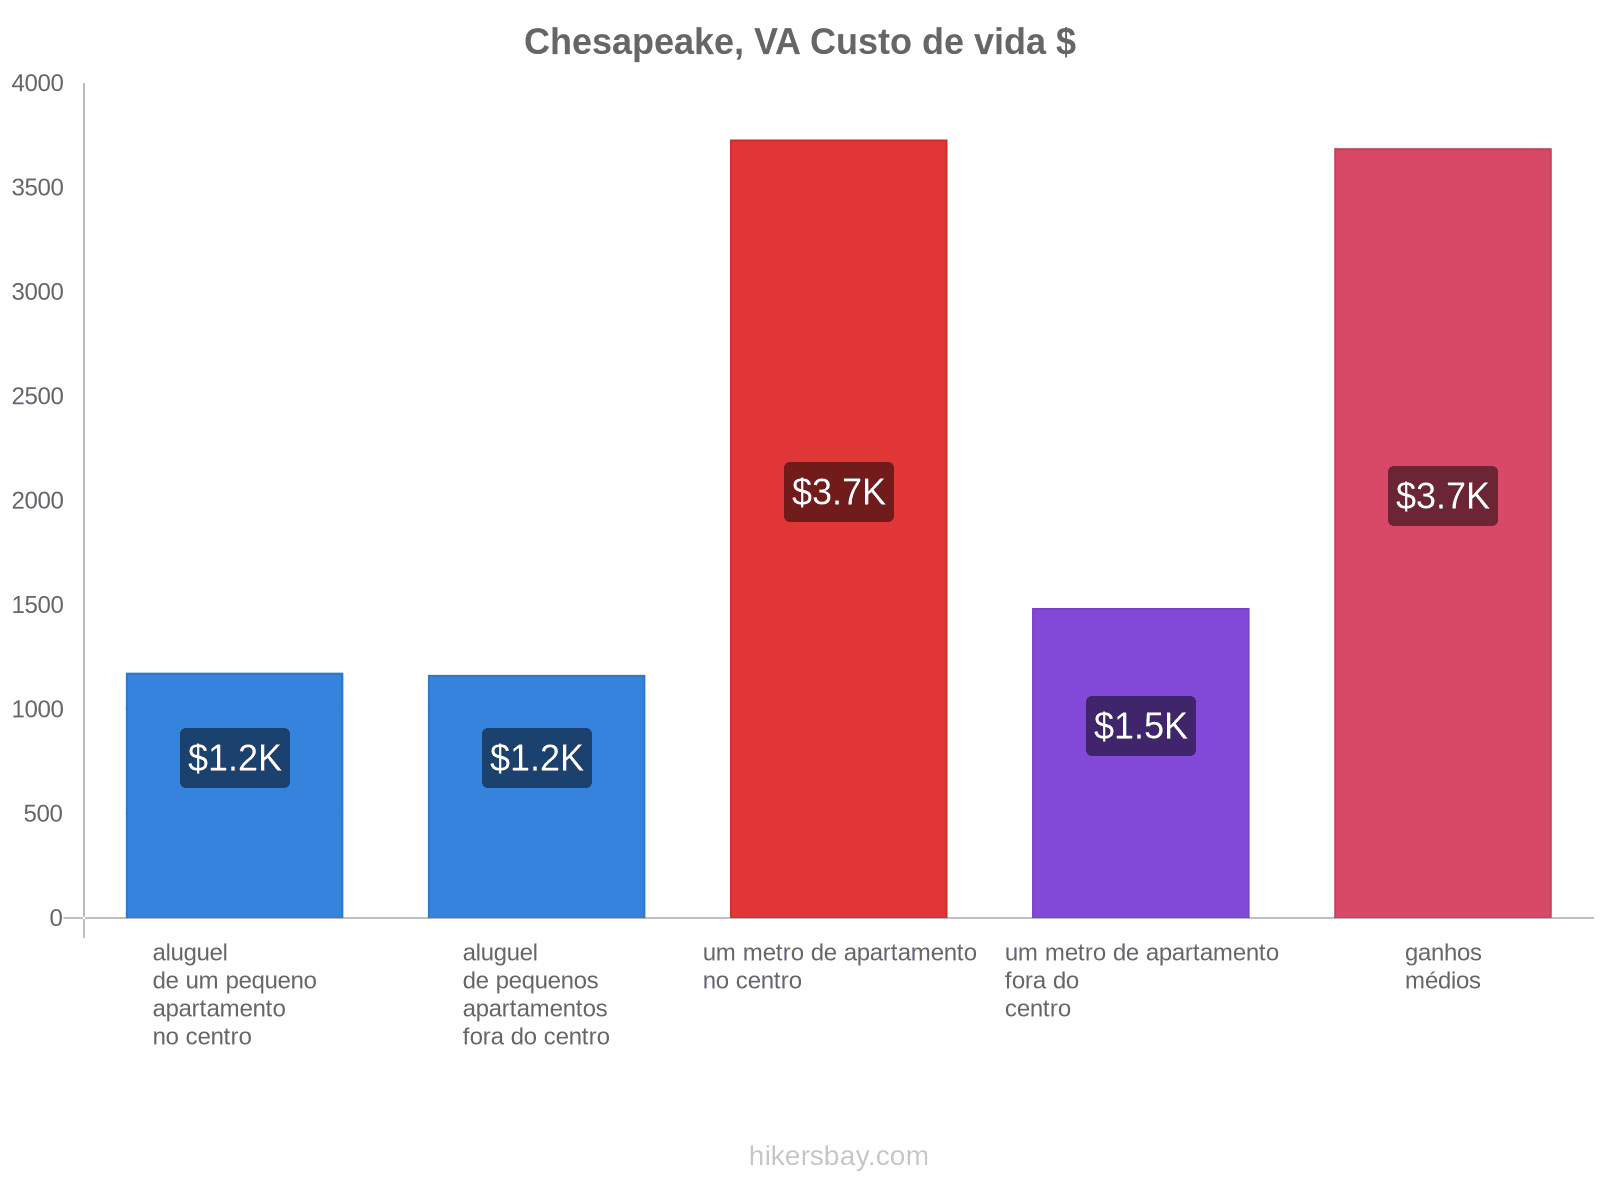 Chesapeake, VA custo de vida hikersbay.com